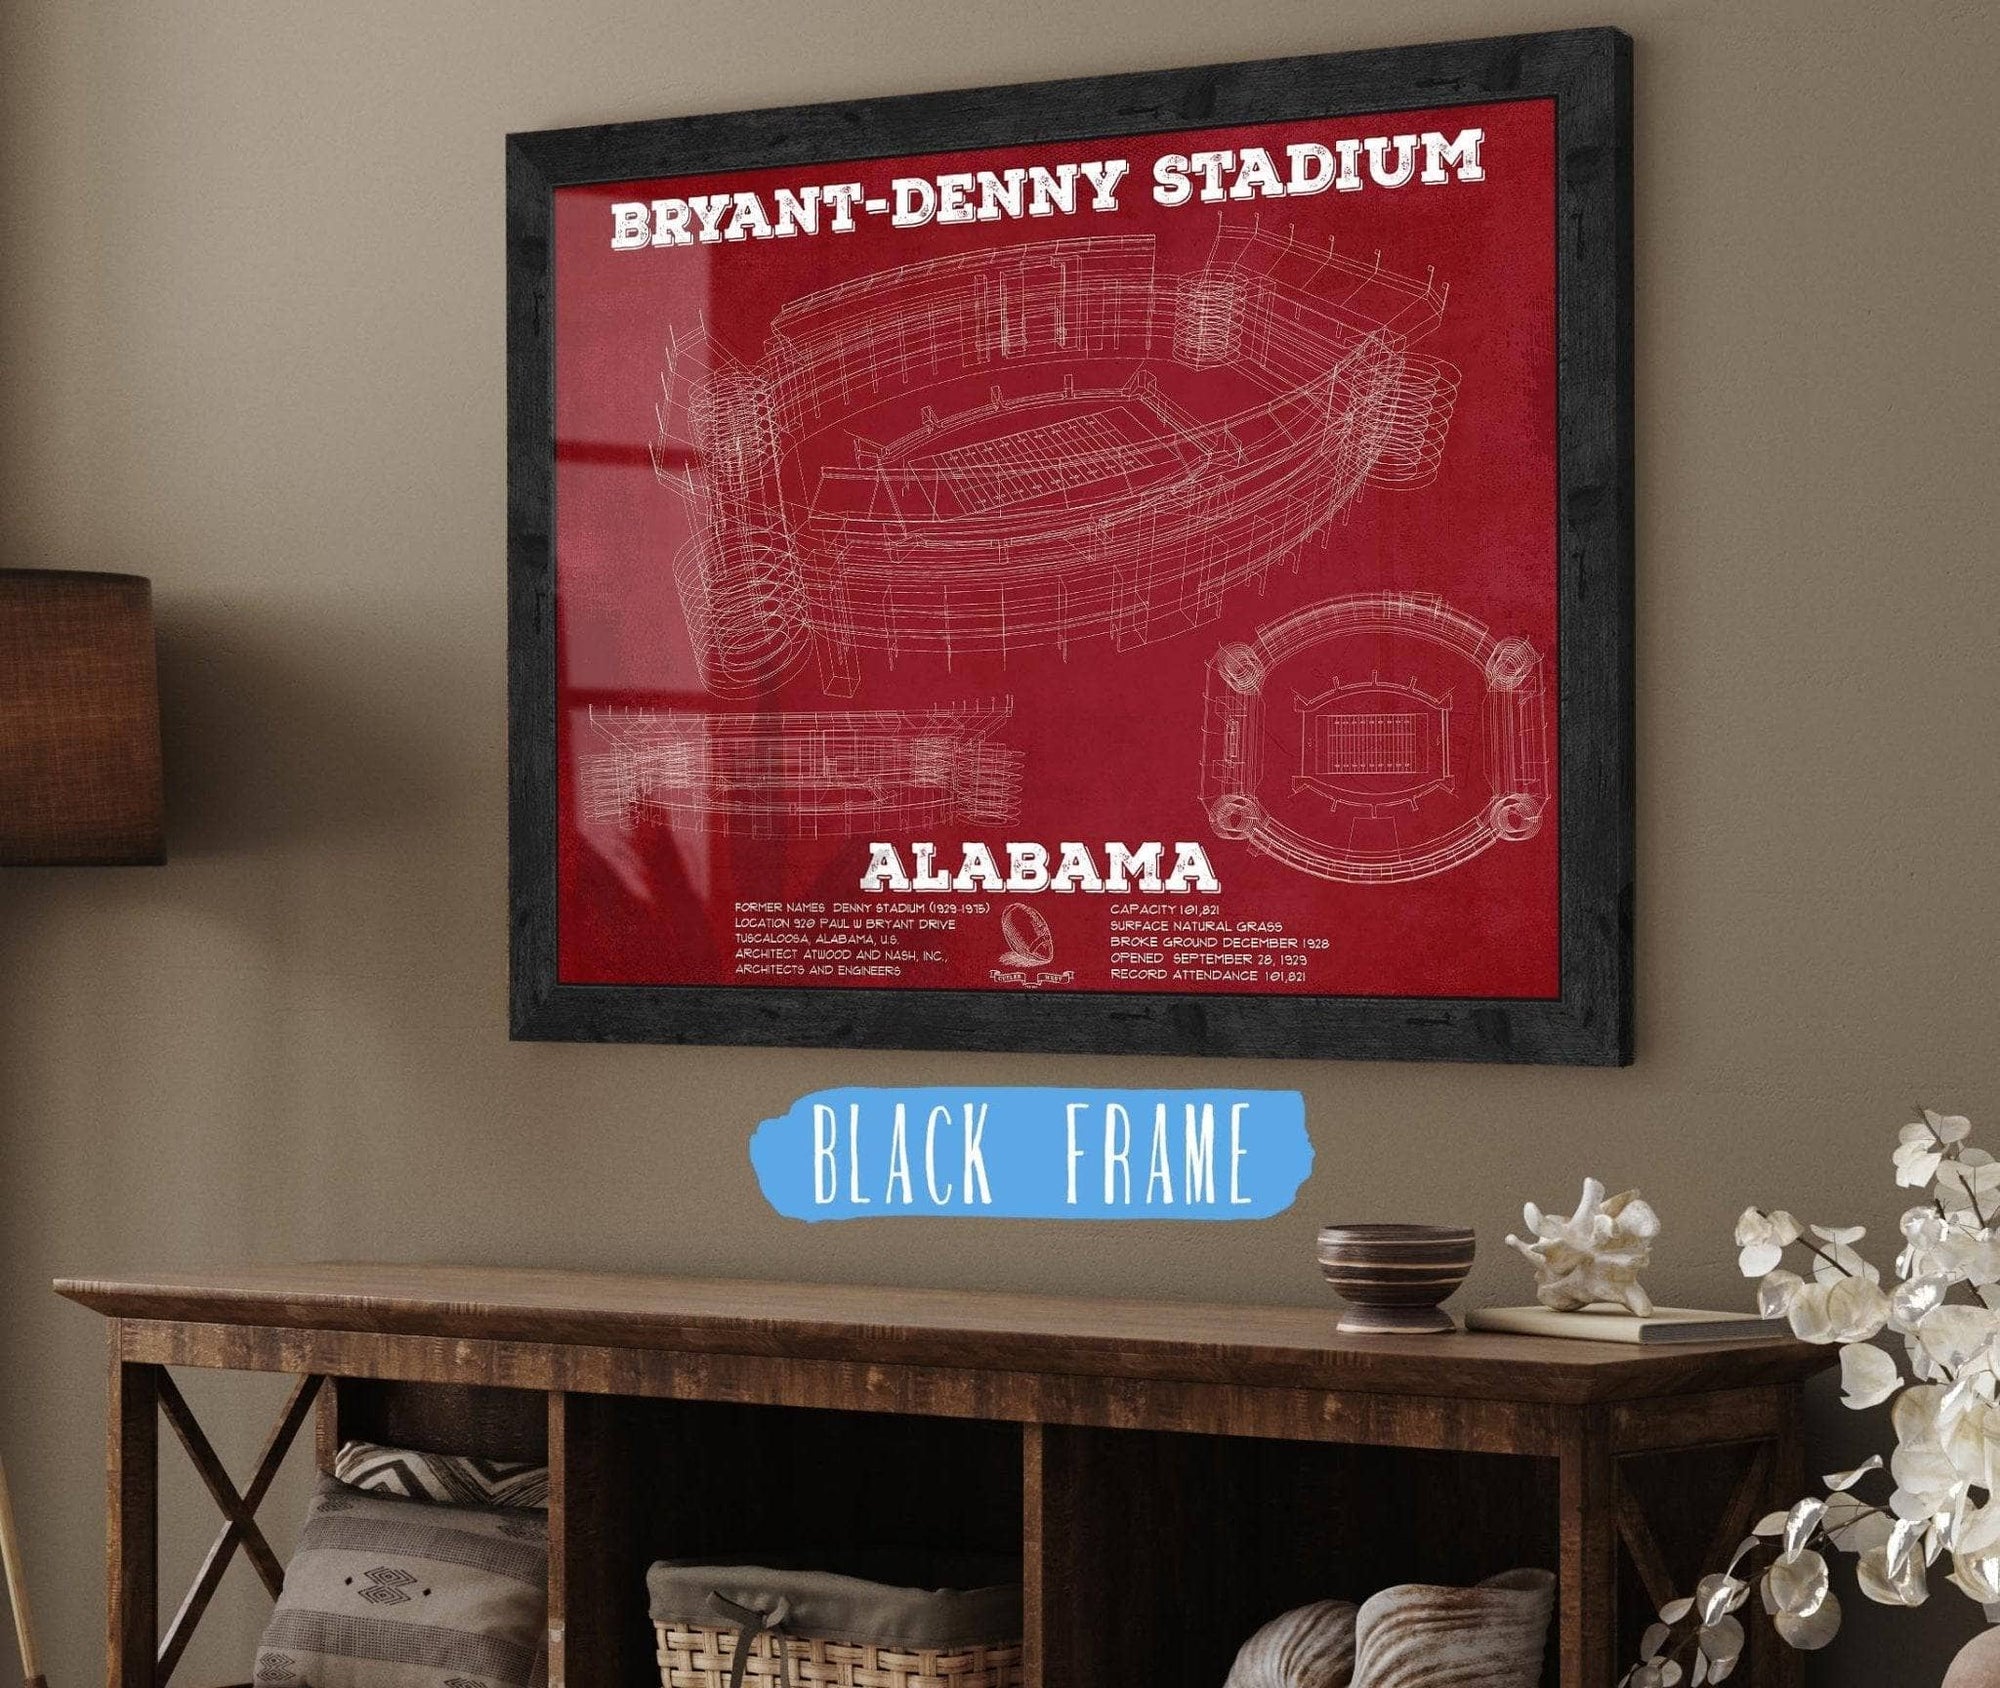 Cutler West College Football Collection 14" x 11" / Black Frame Alabama Crimson Tide Stadium Art - Bryant-Denny Stadium Vintage Seating Chart 635629844-TOP